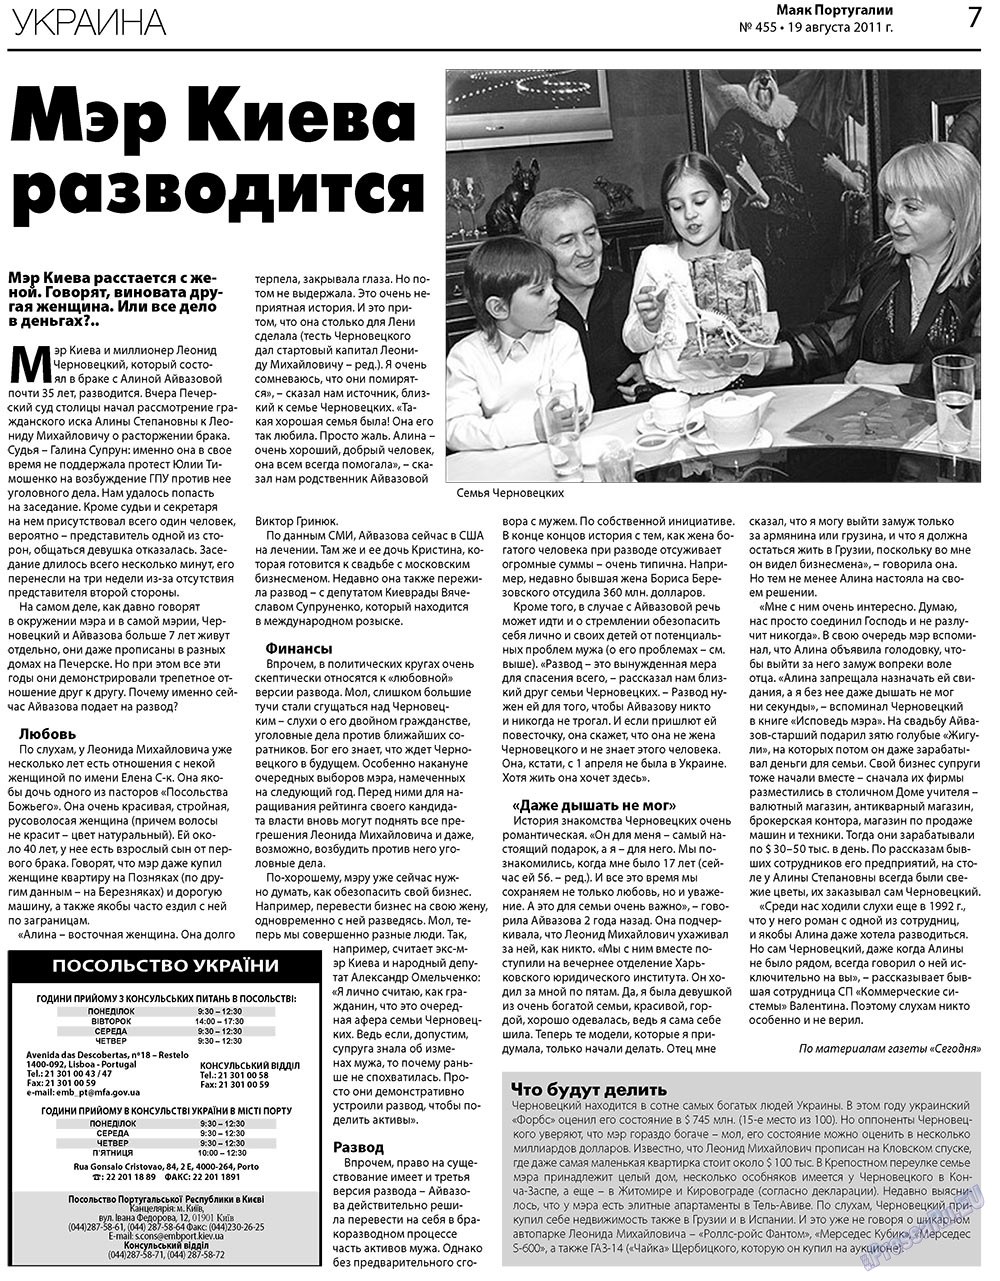 Маяк Португалии, газета. 2011 №455 стр.7